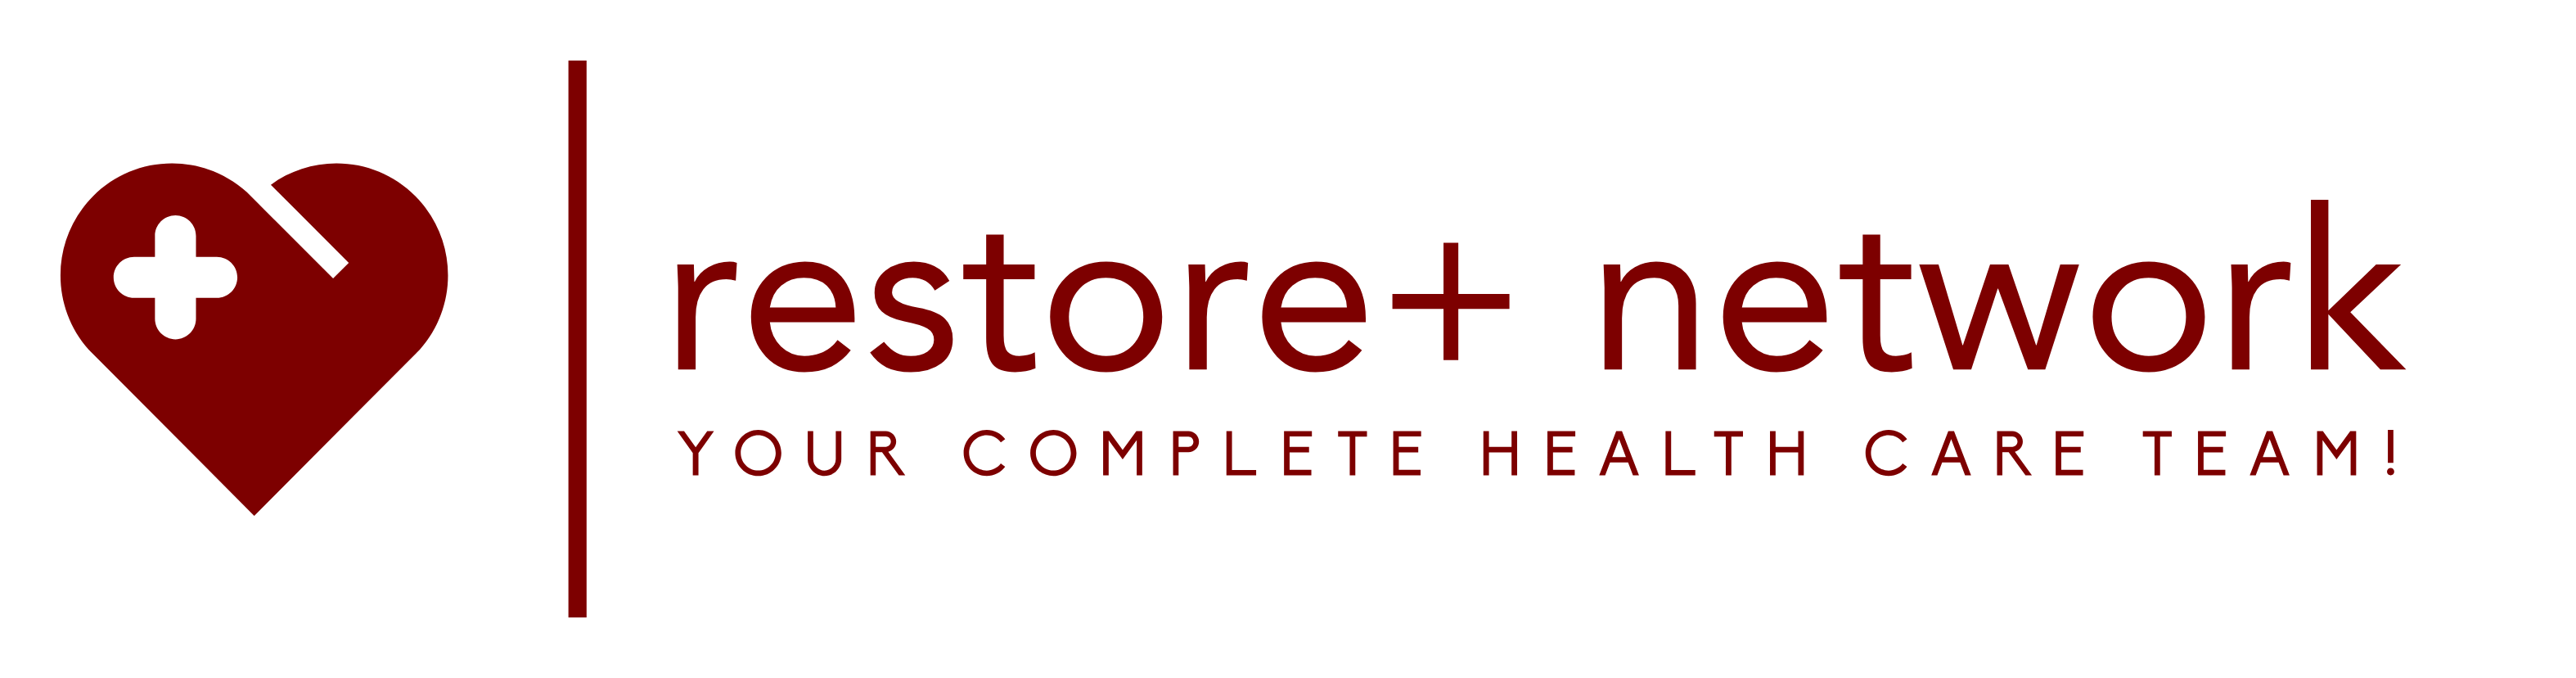 Restore+ Network Logo